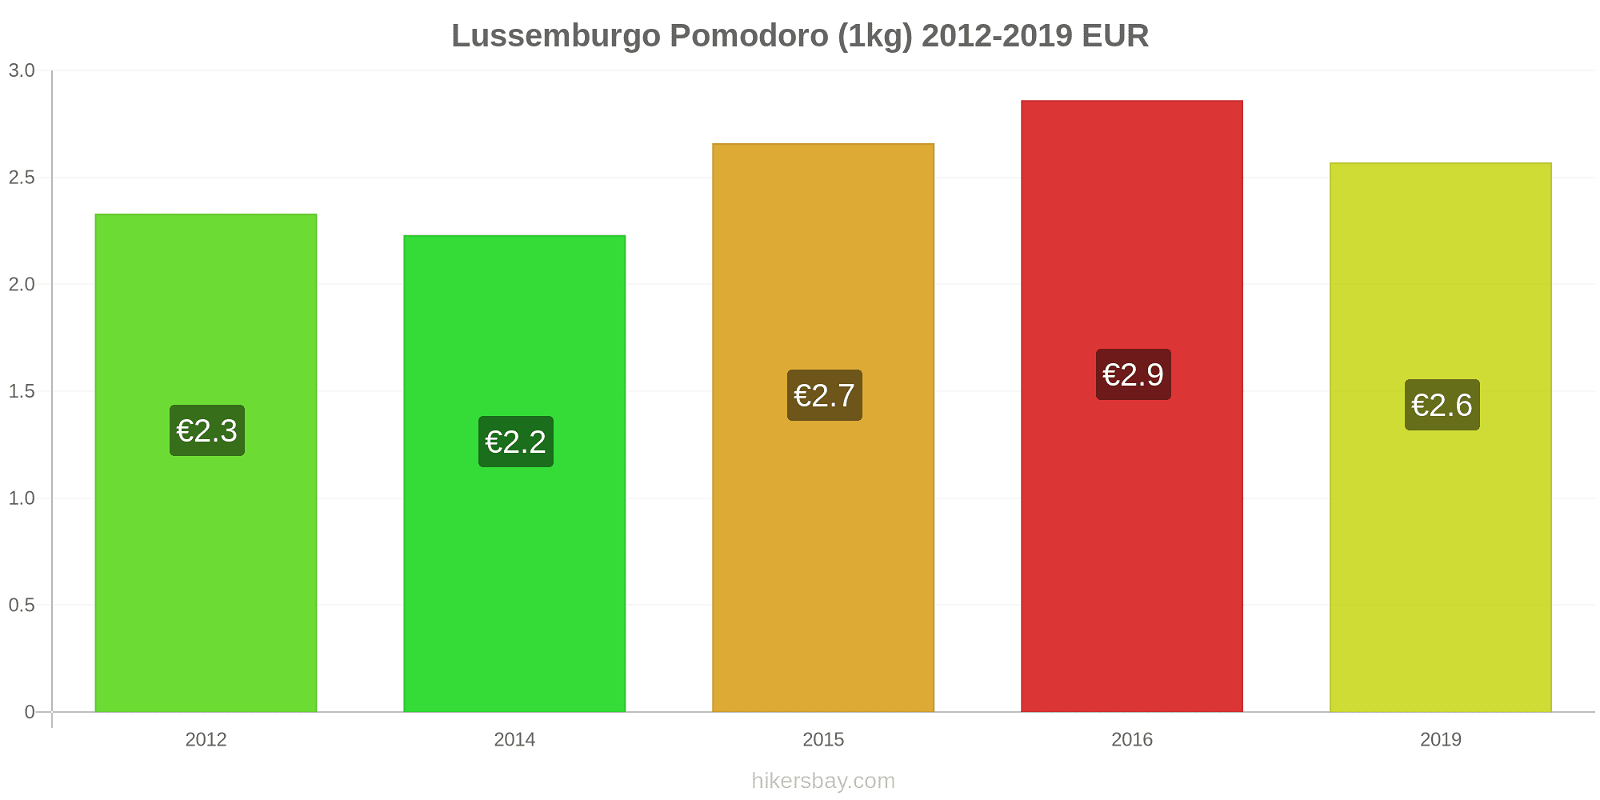 Lussemburgo variazioni di prezzo Pomodoro (1kg) hikersbay.com